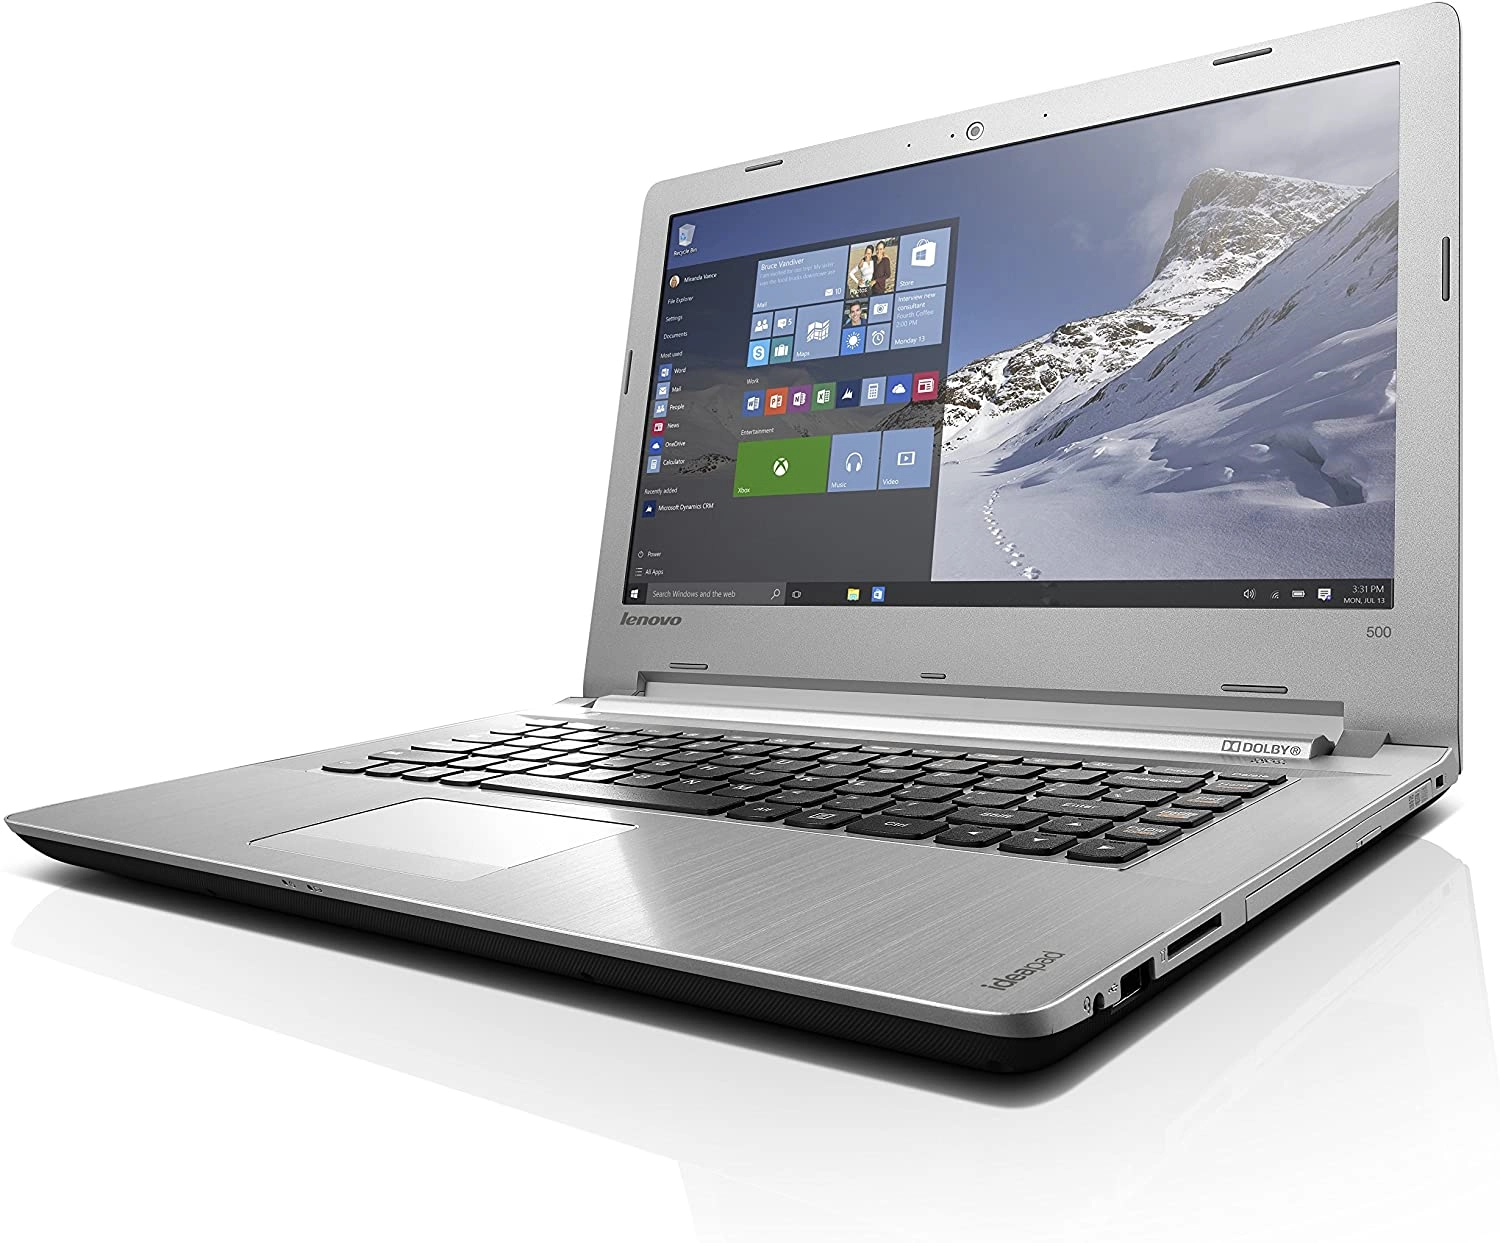 Lenovo 500 laptop image